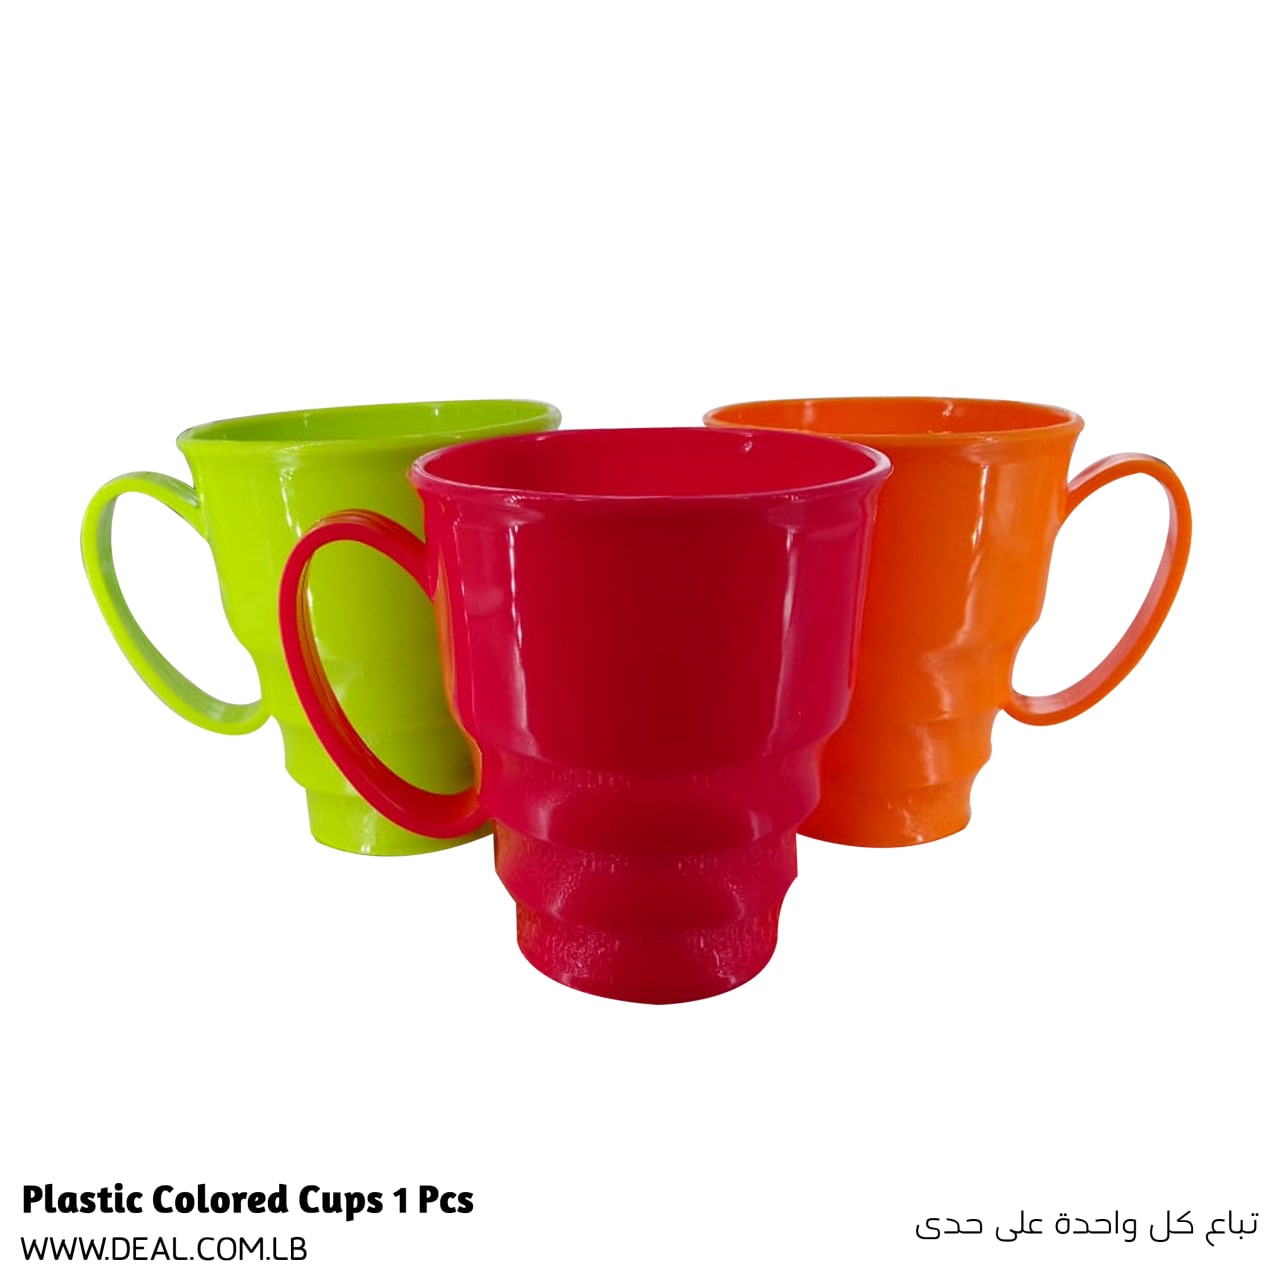 Plastic Colored Cups 1 Pcs